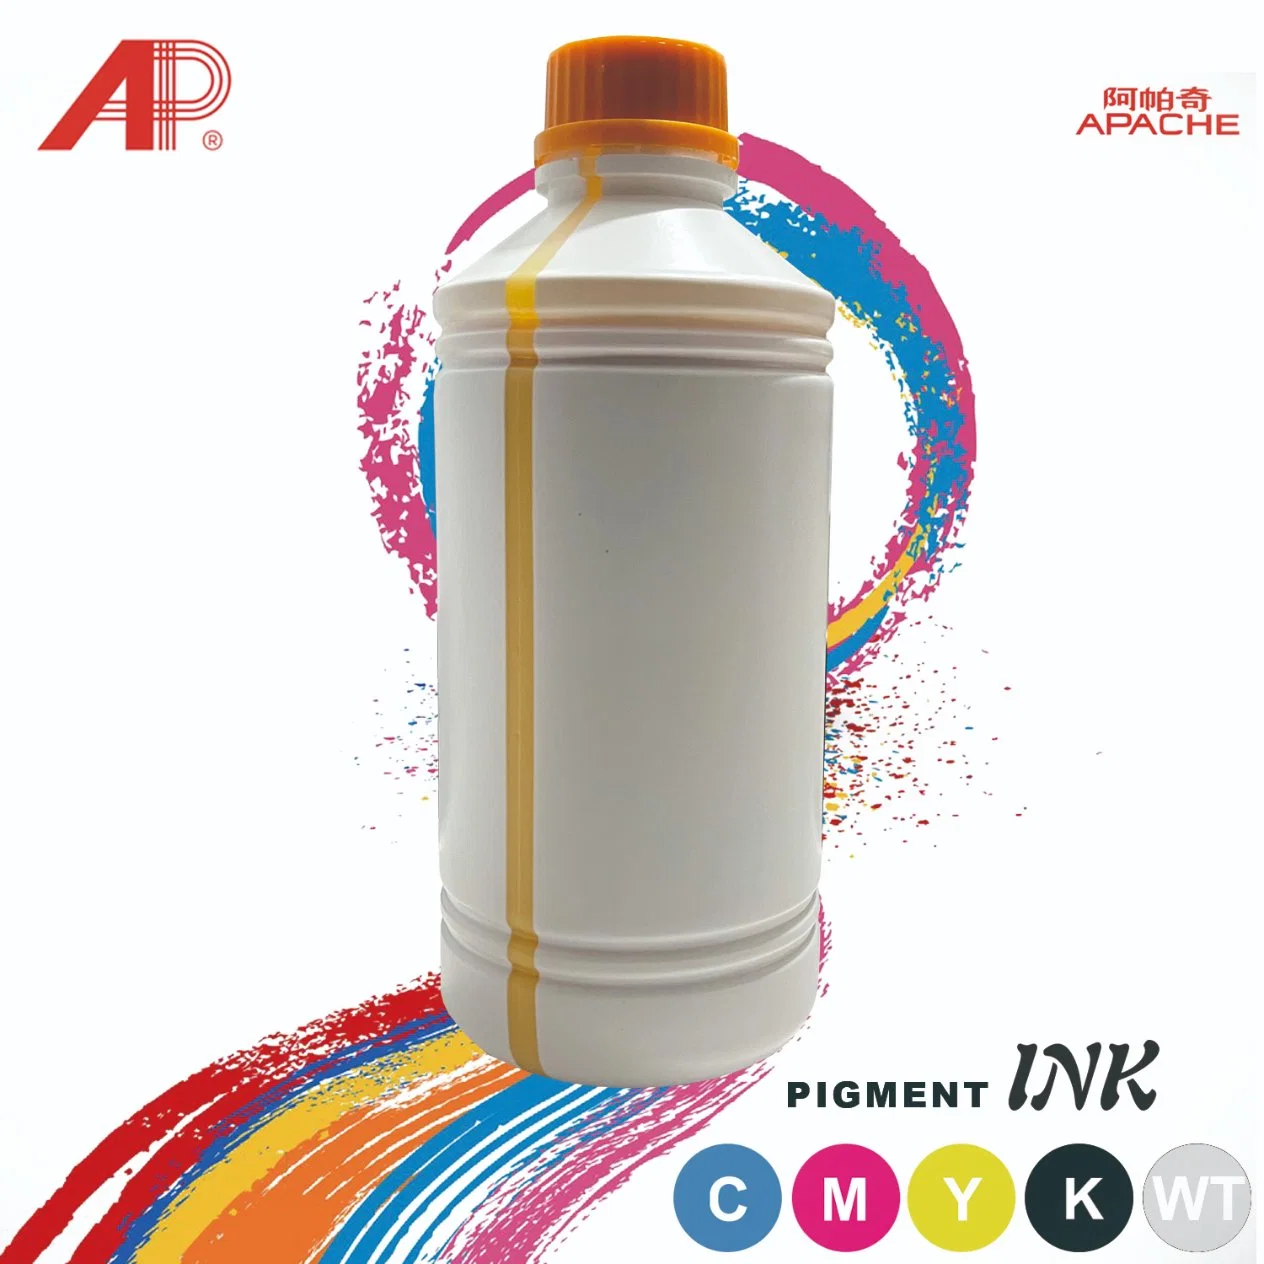 Popular and Vivid Color Dtf Pigment Ink Cmyk+W Color